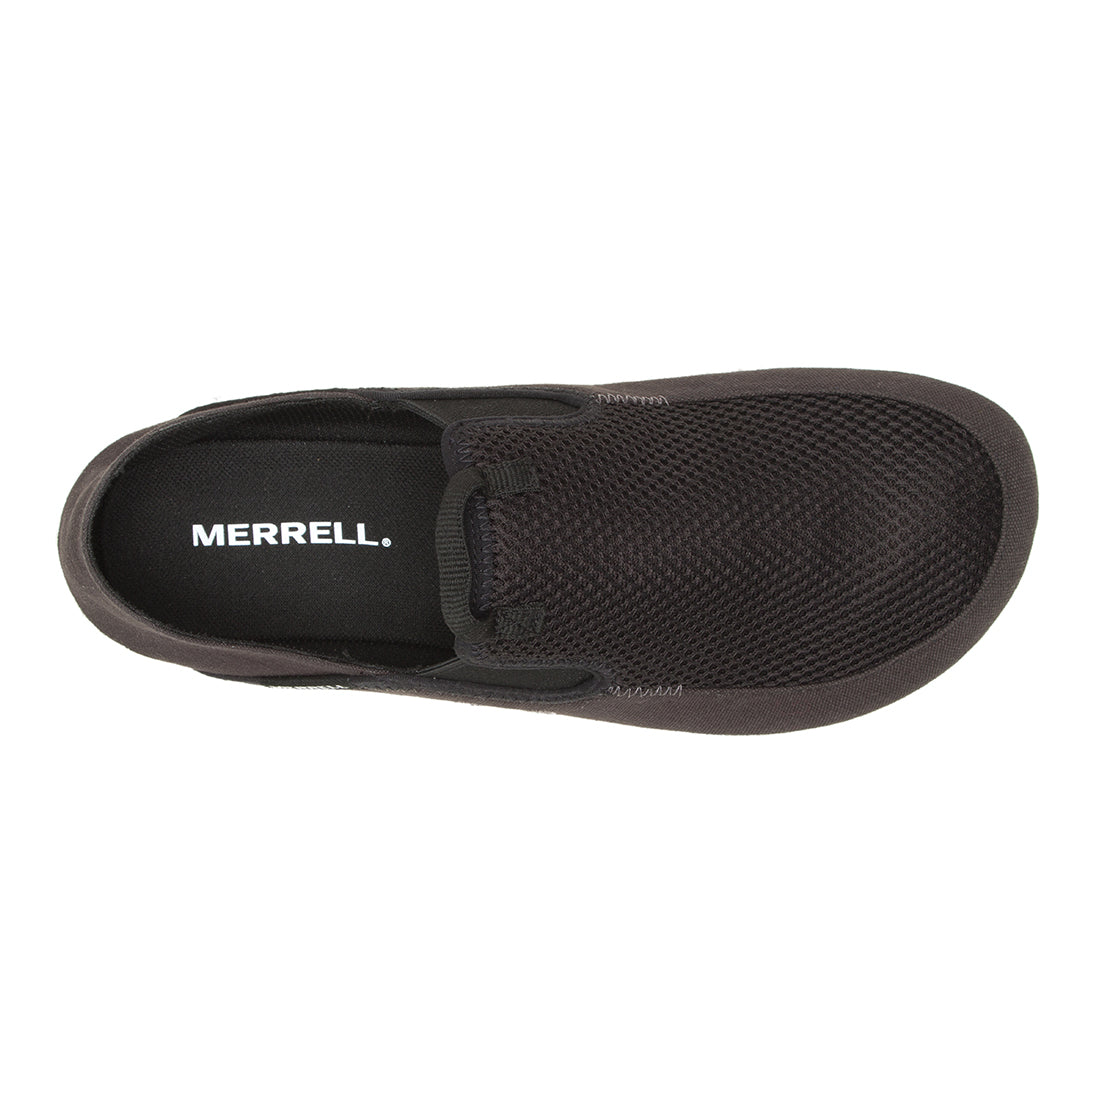 Merrell Hut Moc 2 Sport - Black Mens Aftersports-Athletic Shoes